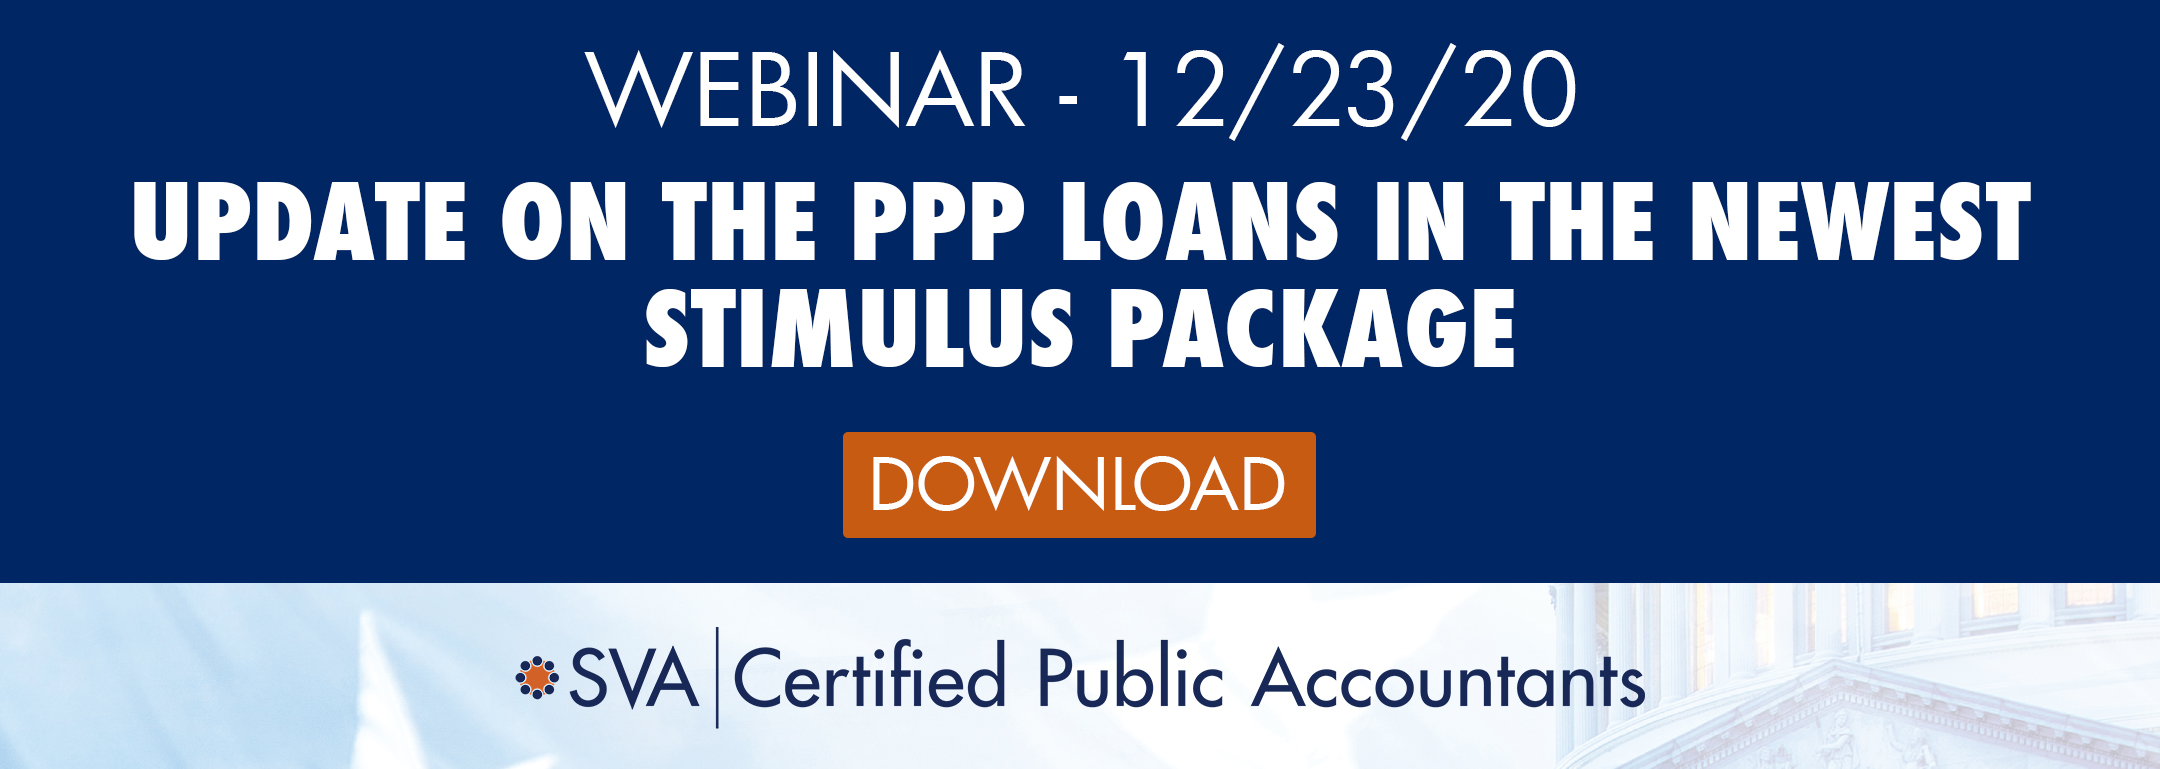 Latest Updates on Stimulus Legislation Tax Credits and PPP Loans